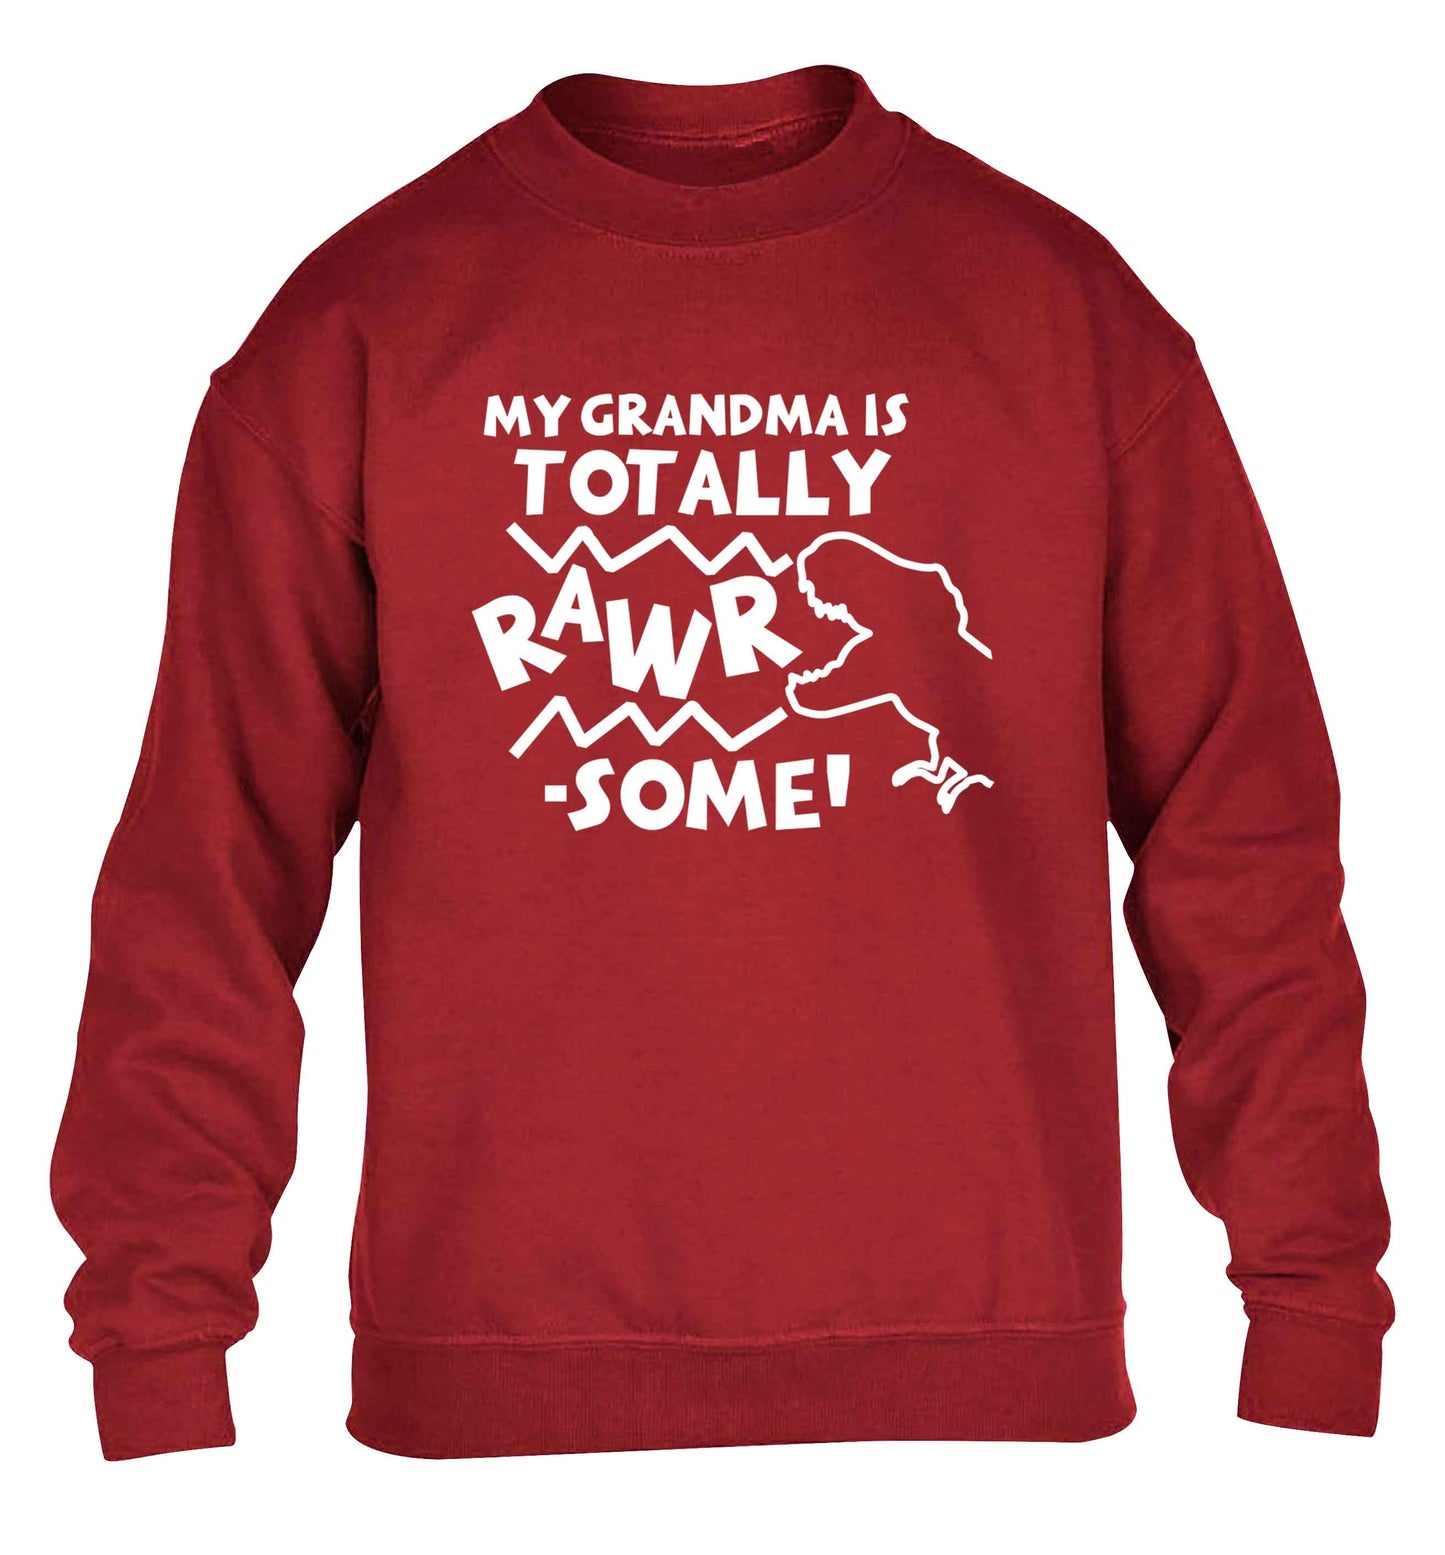 My grandma is totally rawrsome children's grey sweater 12-13 Years